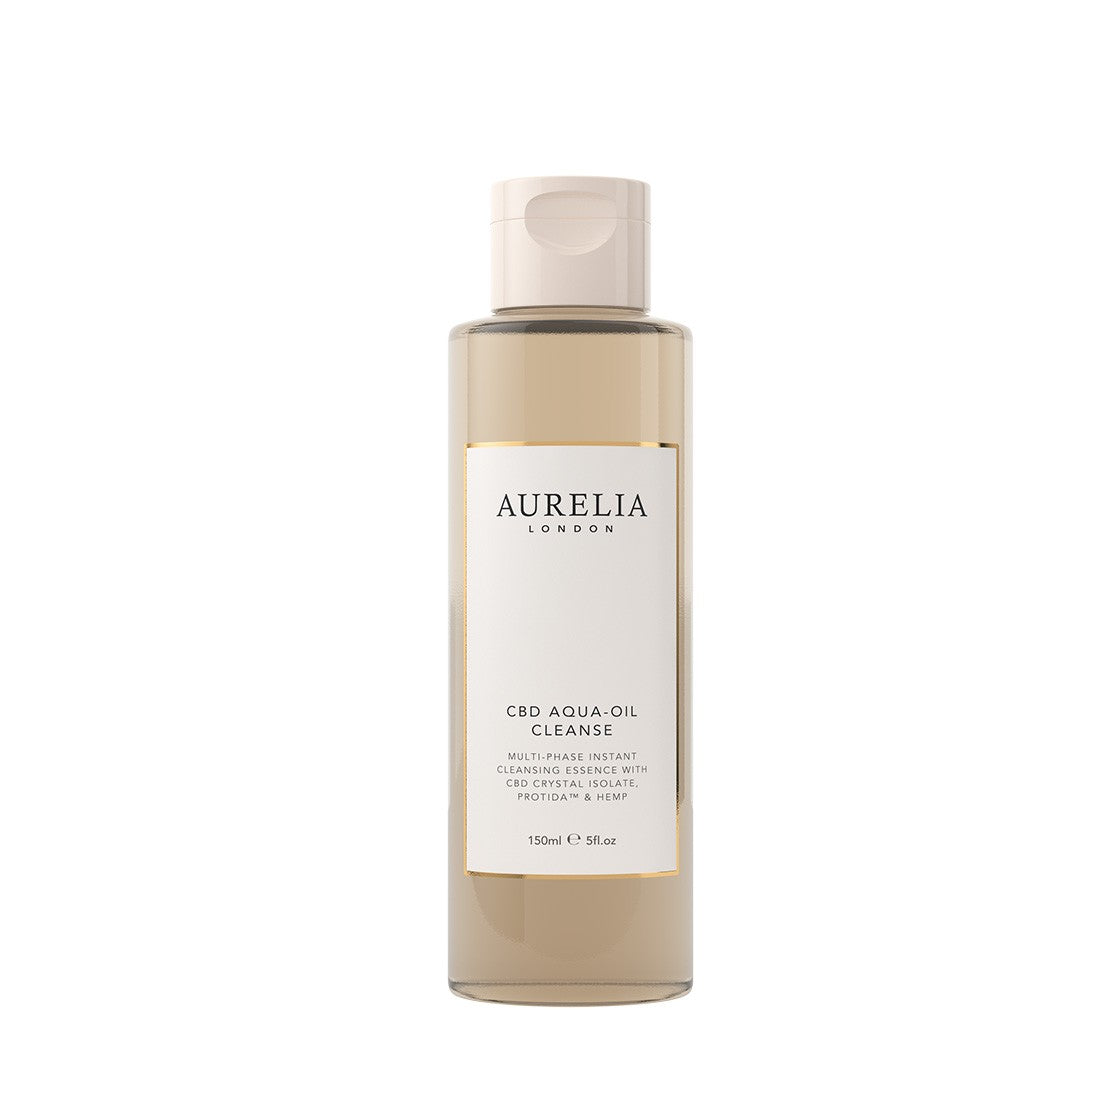 Aurelia London CBD Aqua-Oil Cleanse - 150ml